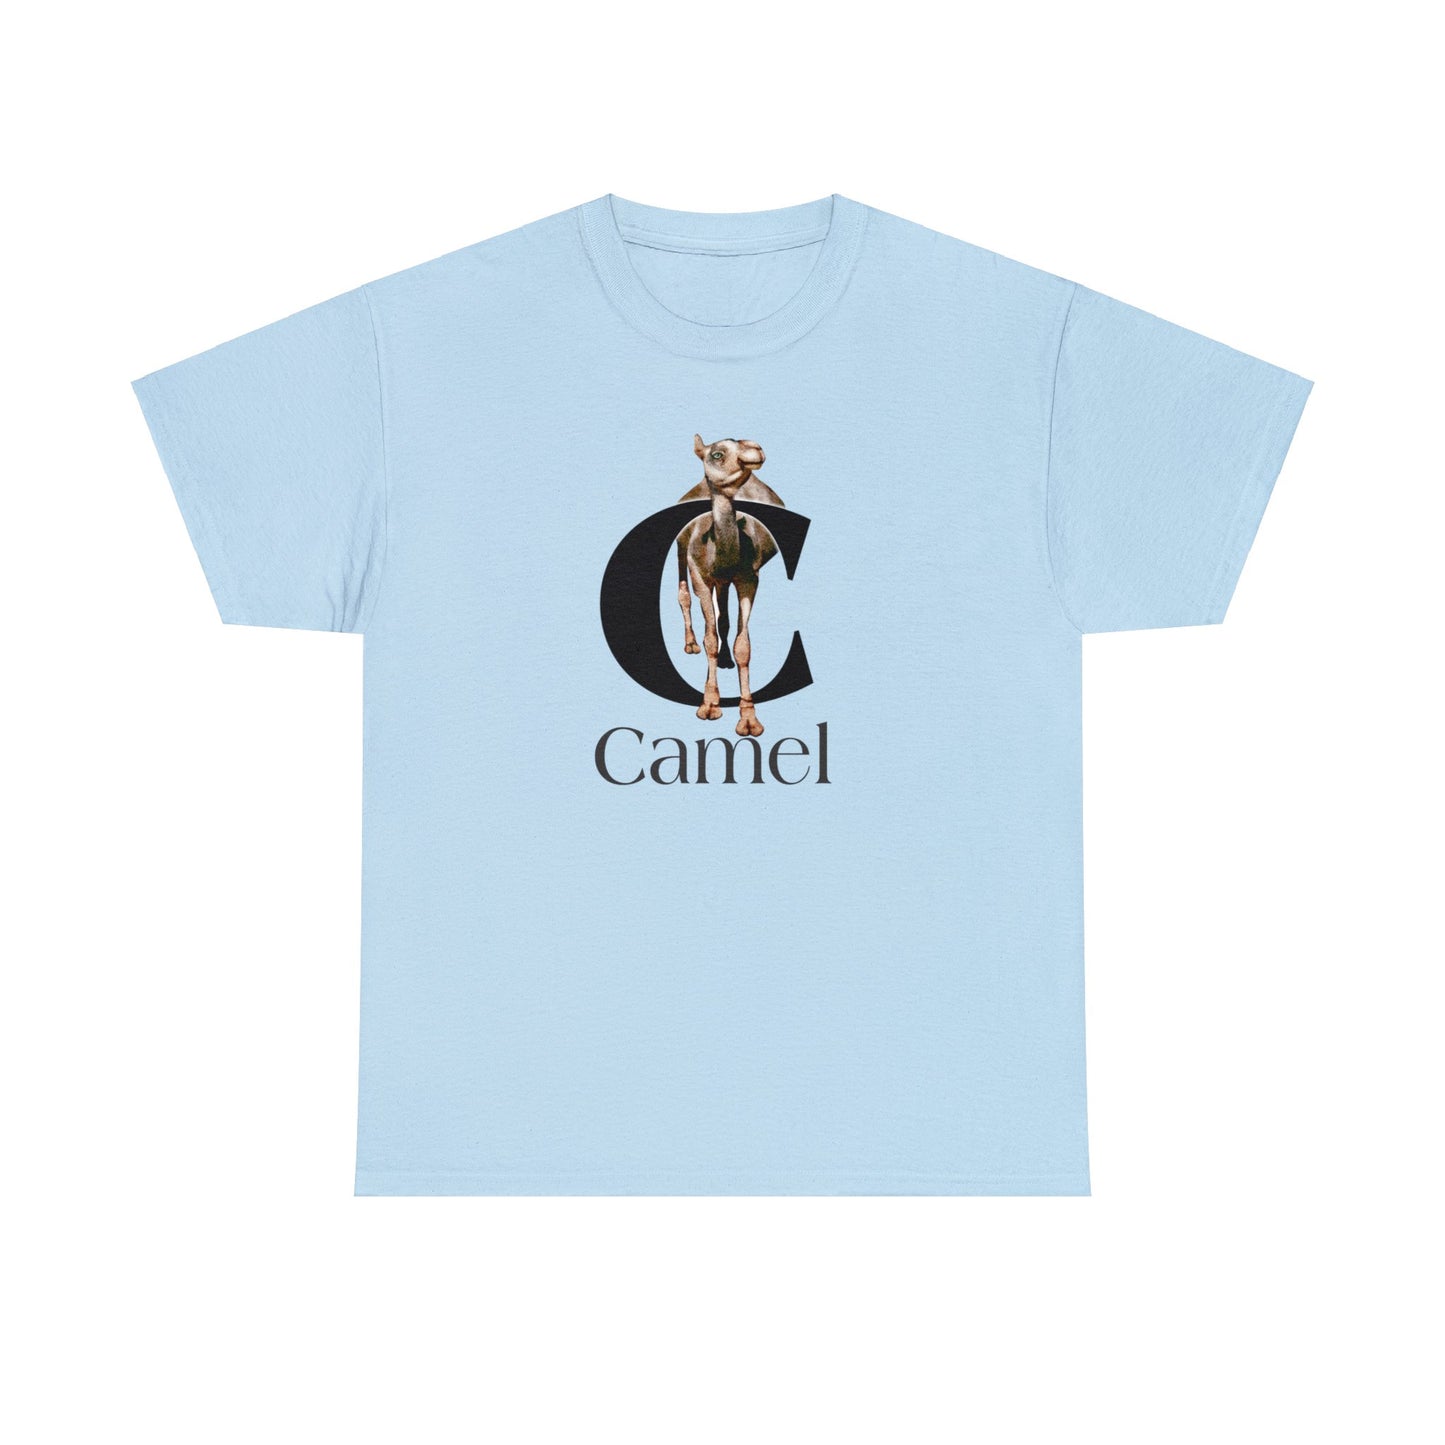 C is for Camel t-shirt, Camel Drawing T-Shirt, Camel Illustration, Camel lover shirt, animal